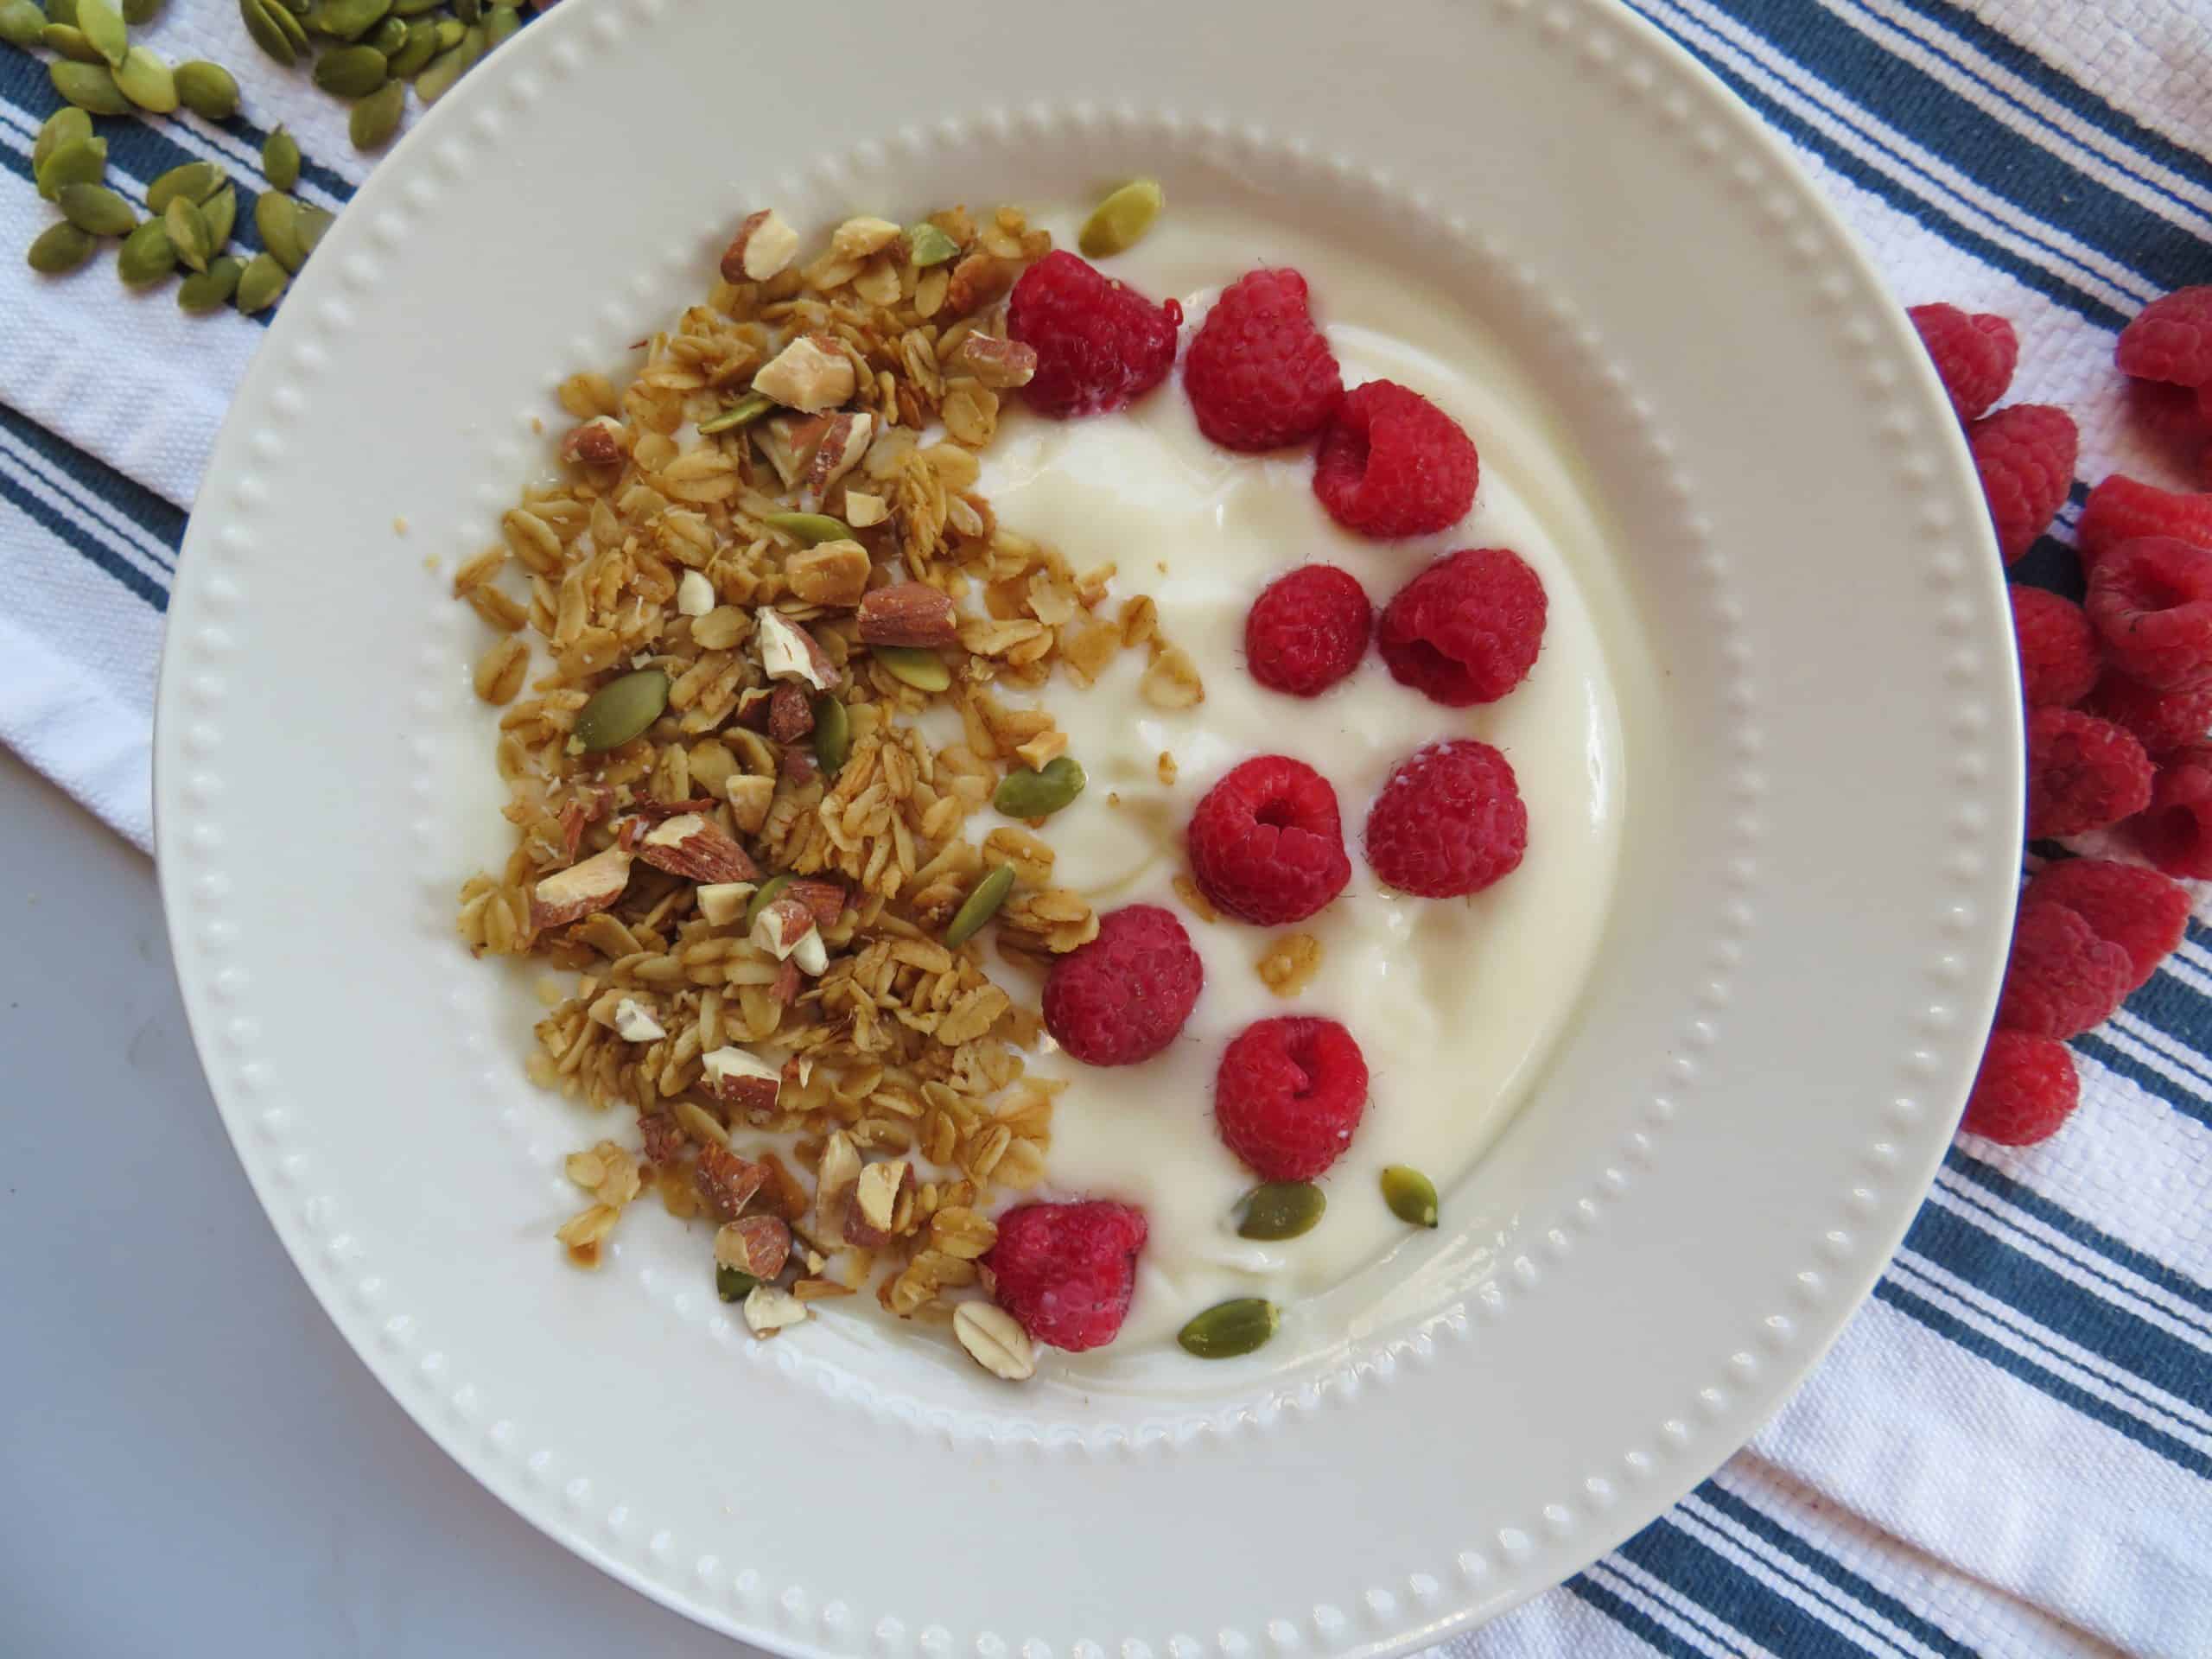 Fruit and Granola Yogurt bowl - The Midwest Kitchen Blog